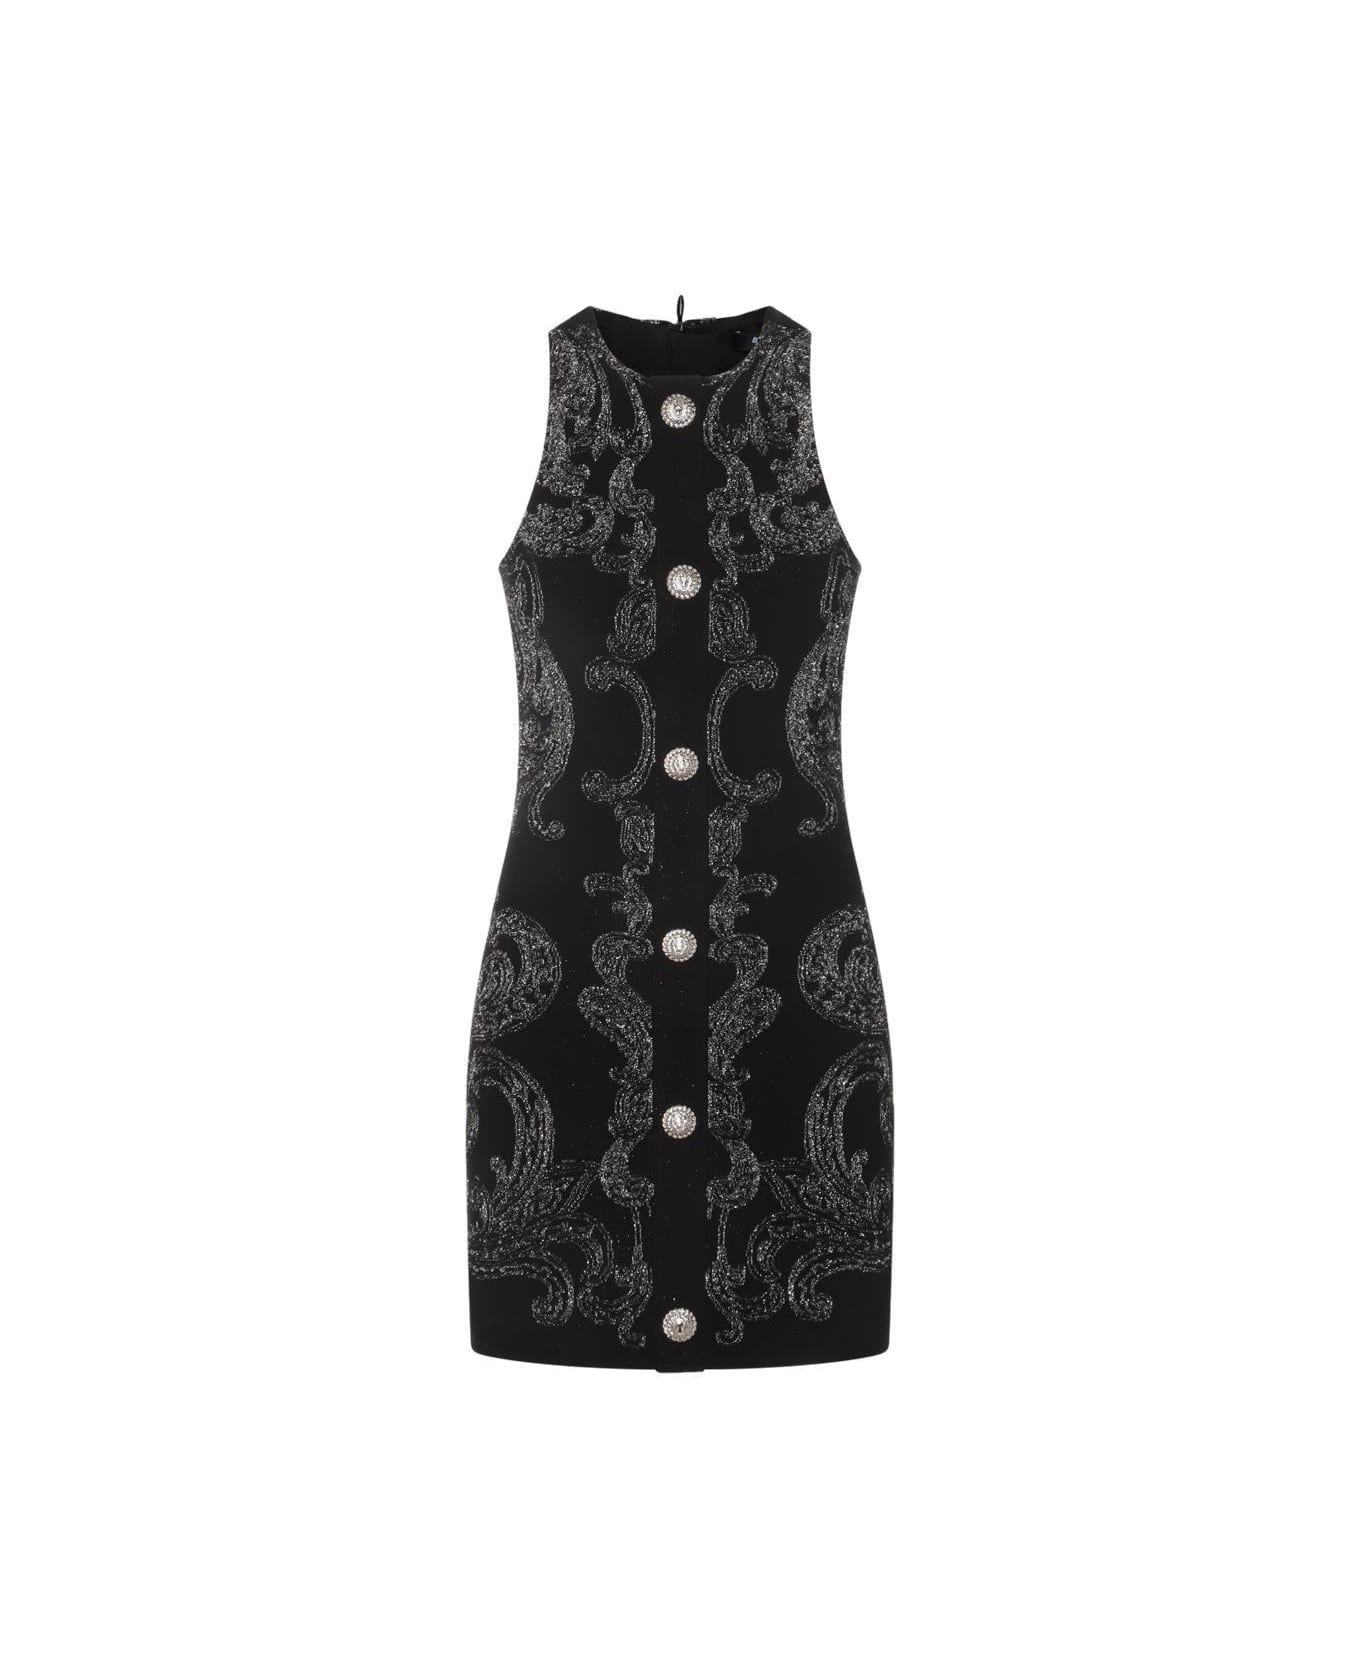 Balmain Paisley Knit Sleeveless Dress - Noir/argent